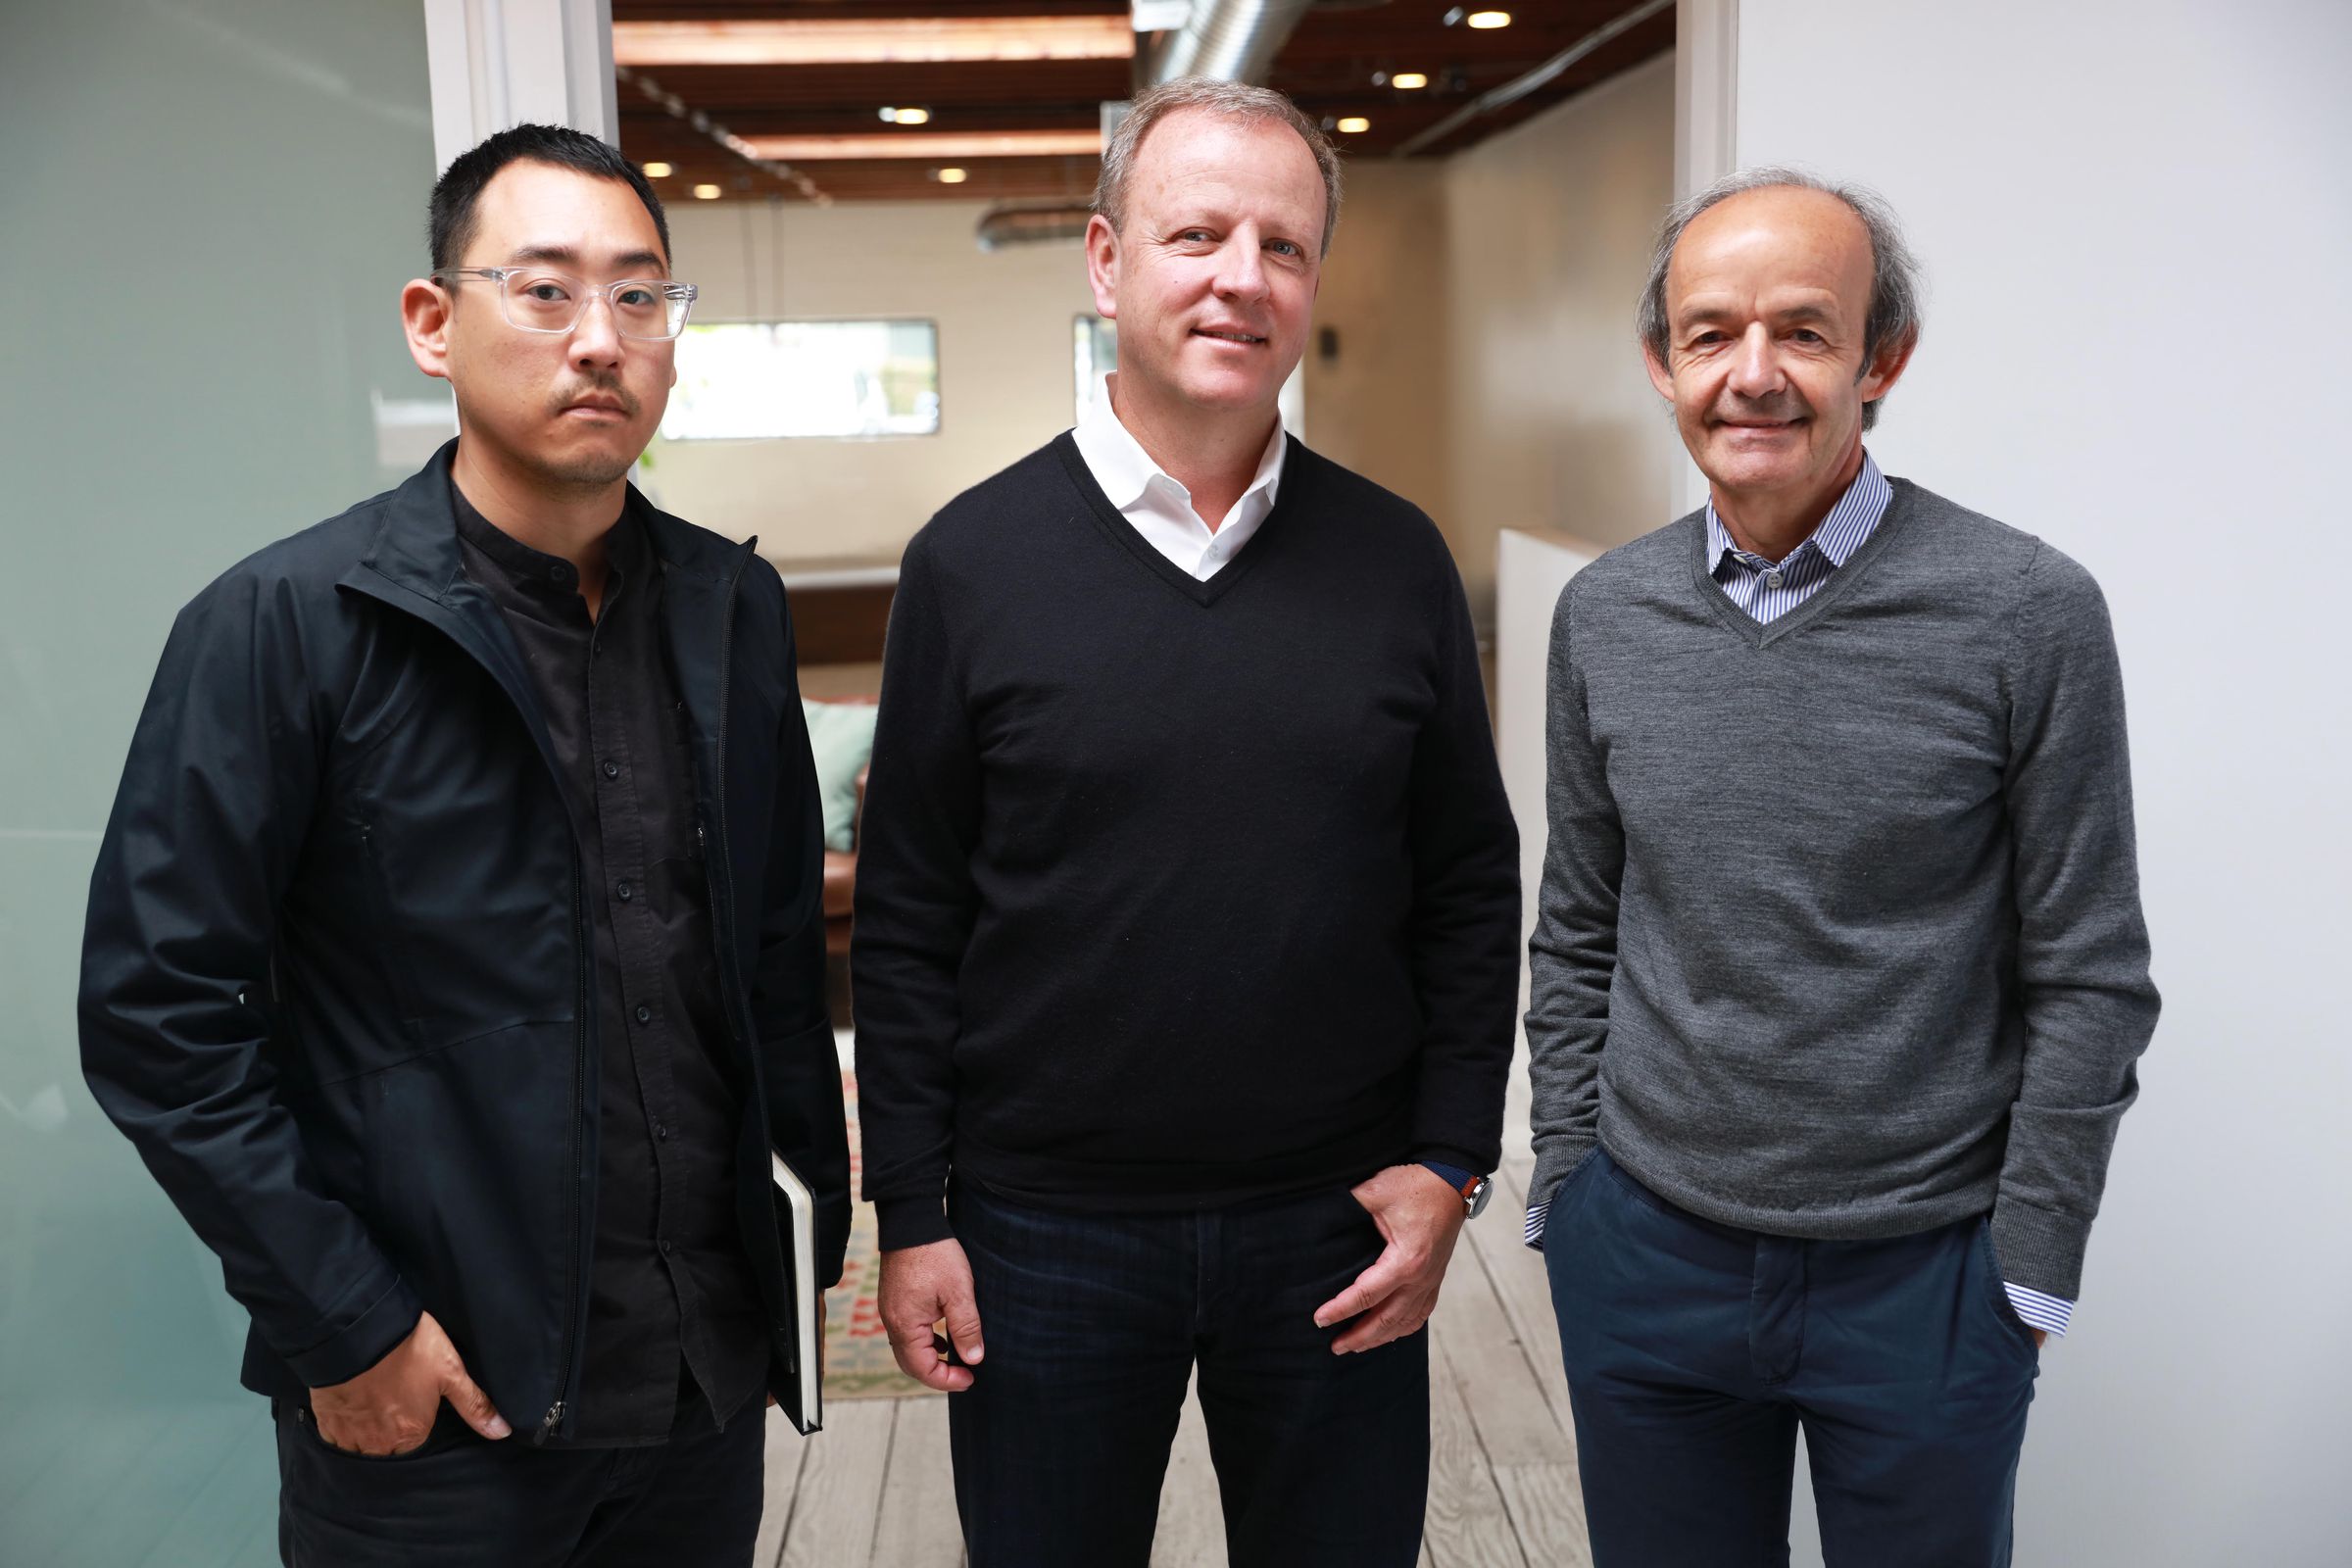 (L to R) Evelozcity head designer Richard Kim, CEO Stefan Krause, and head of technology Ulrich Kranz.